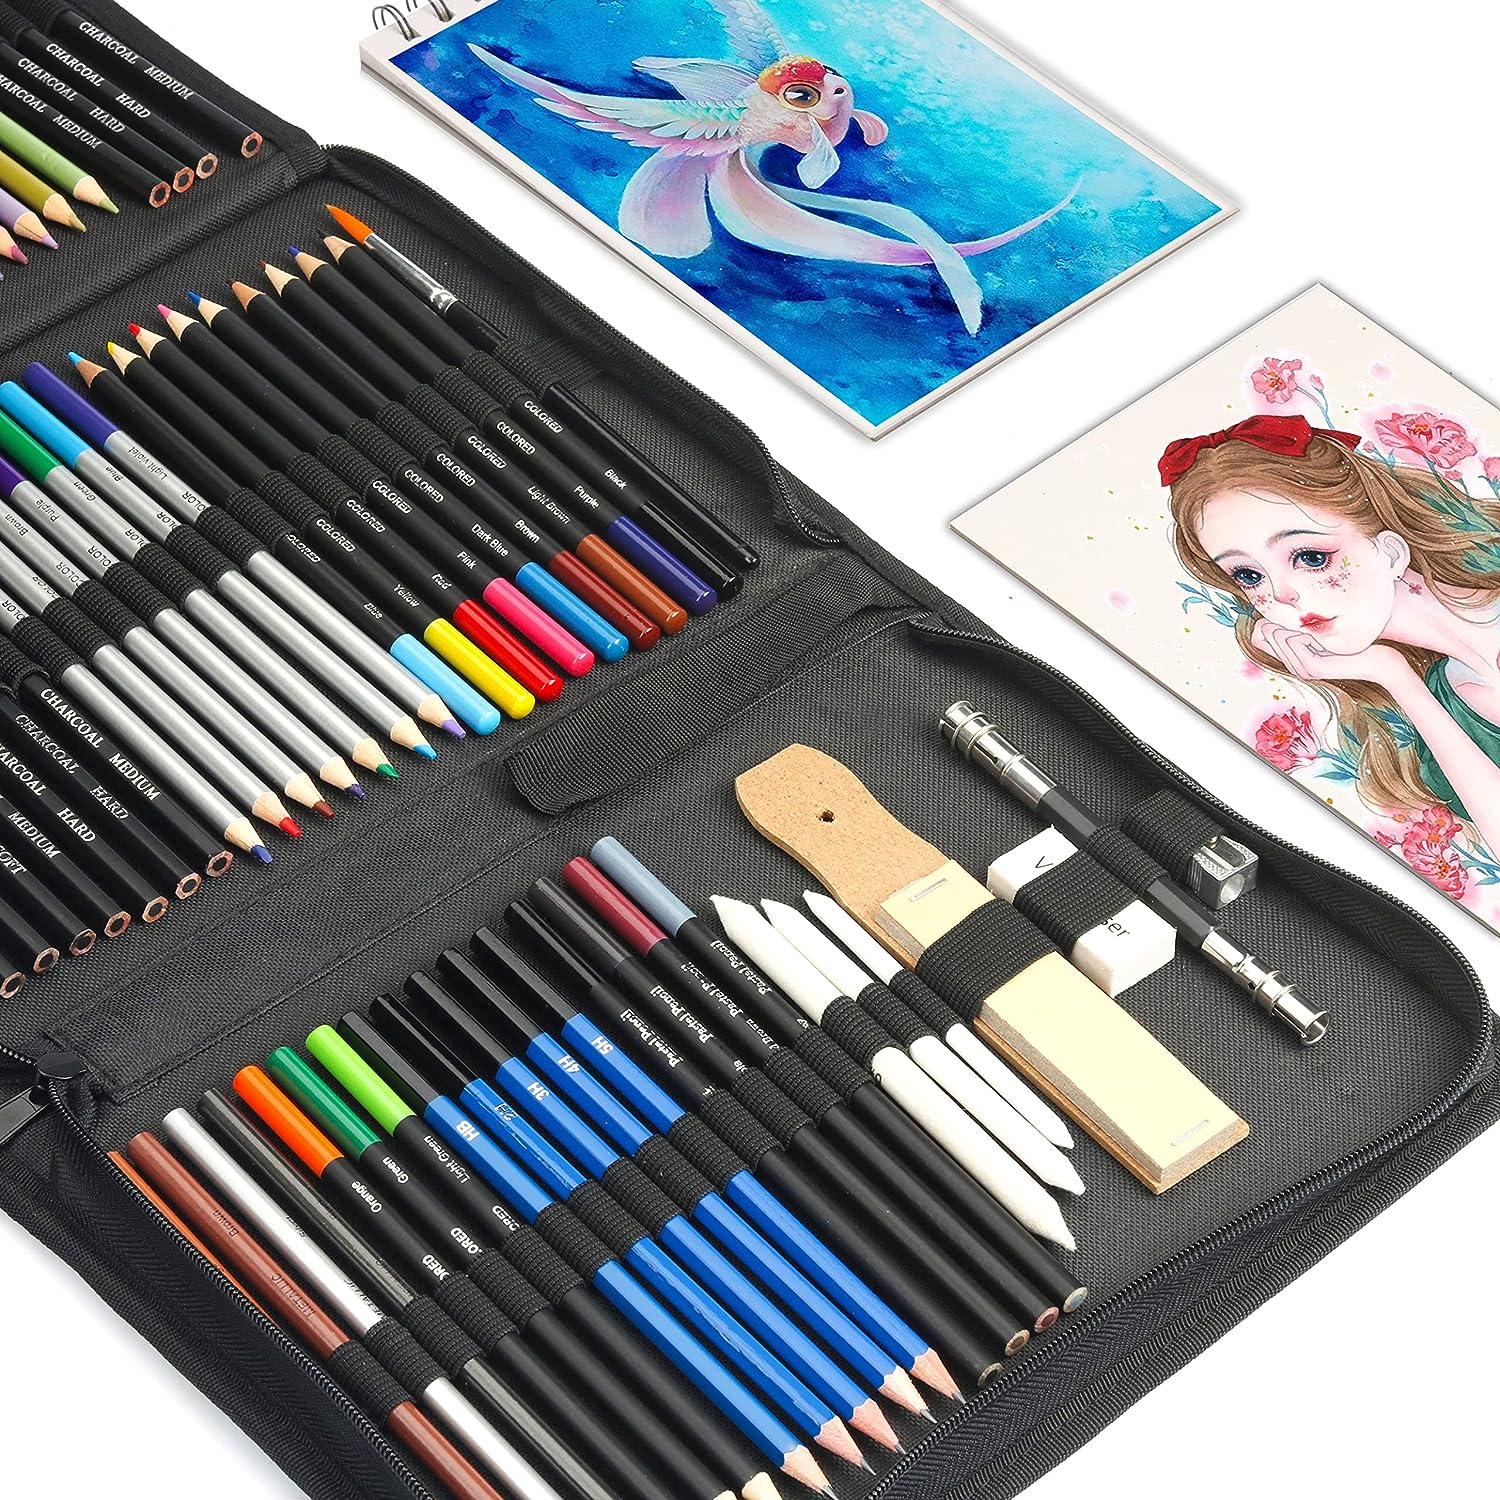 Kalour Professional Drawing Kit, Sketch Pencil Set, Professional Art Sketch  Supplies, With 1 Sketch Book, Portable Zipper Travel Box, Charcoal Pencil,  Sketch Pencil, Charcoal Stick, Pencil Sharpener, Eraser, Artist Art  Supplies For